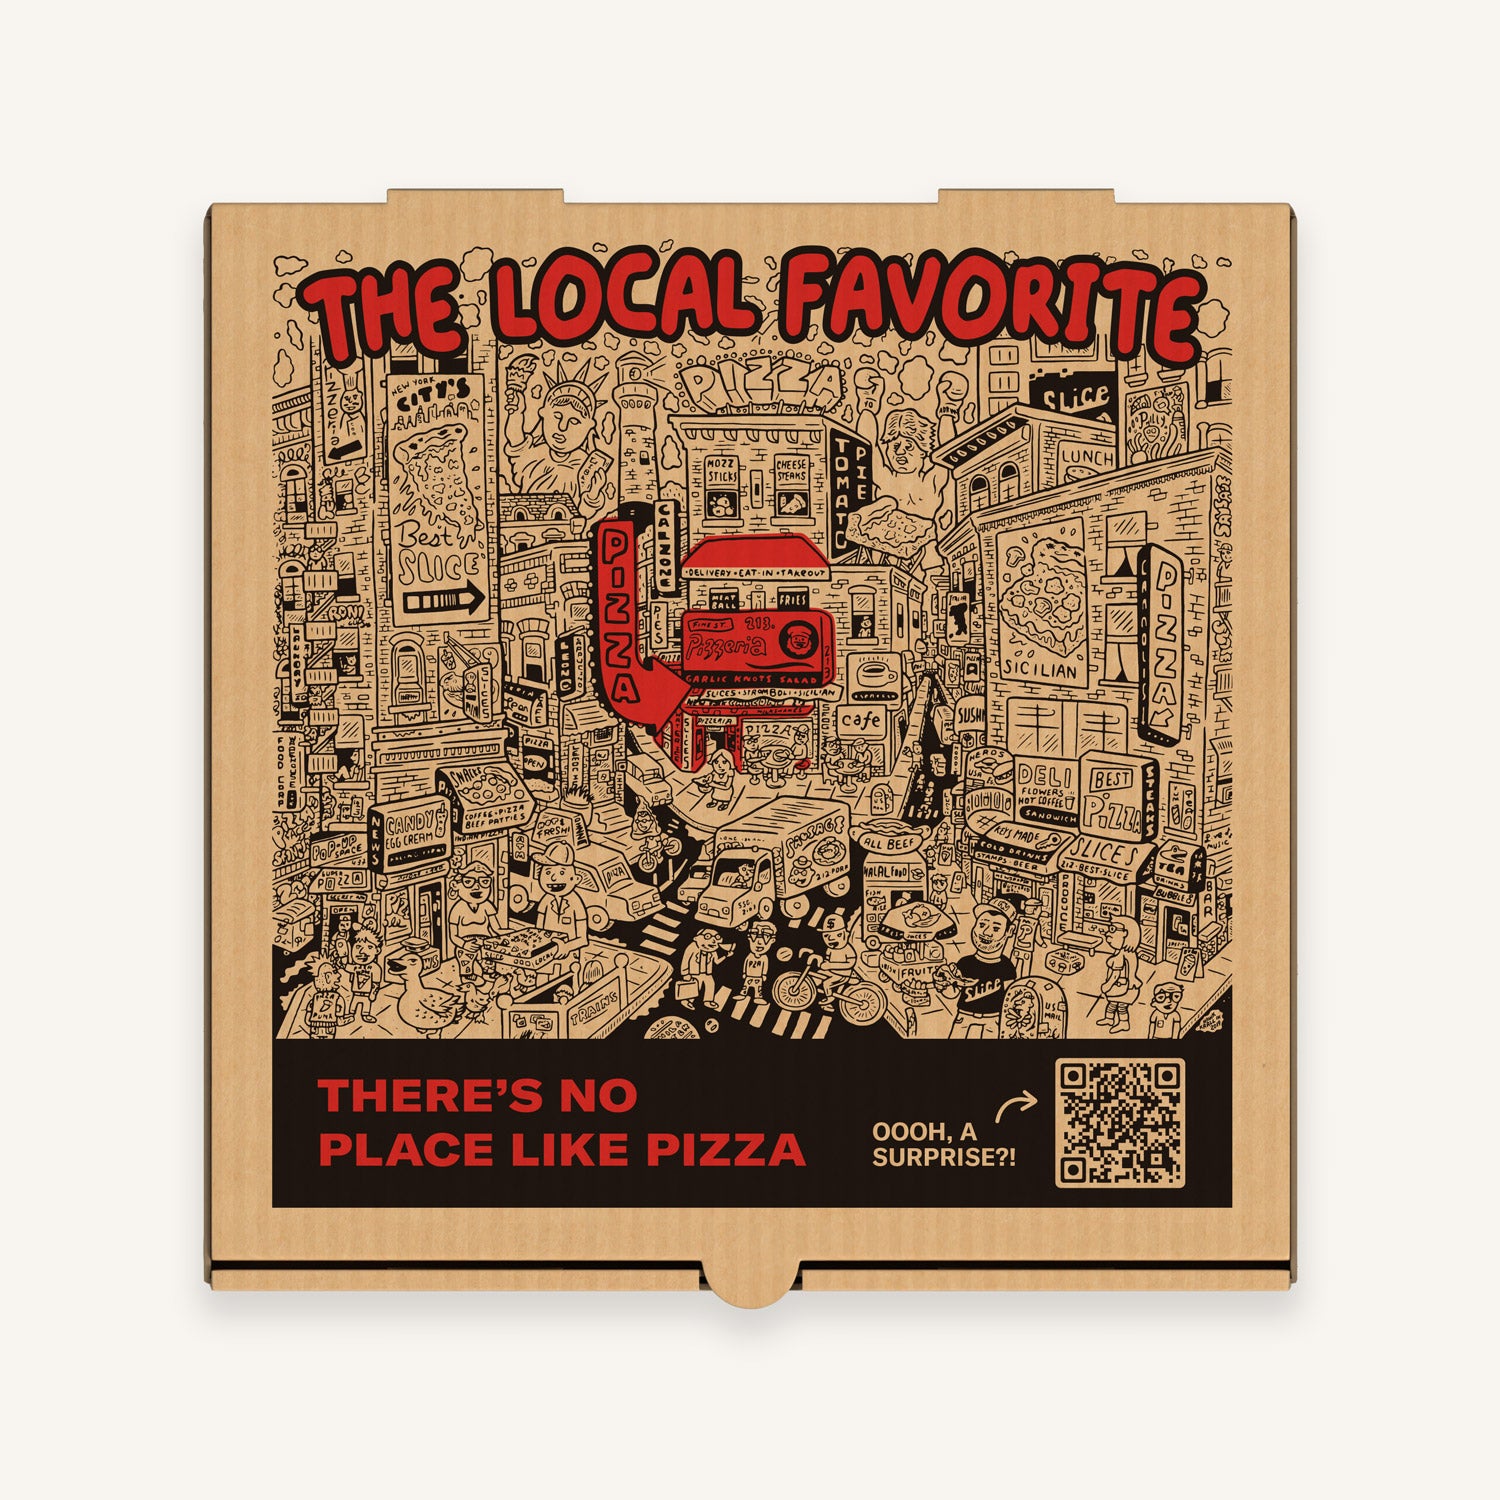 Pizza Sauce – Box of Good